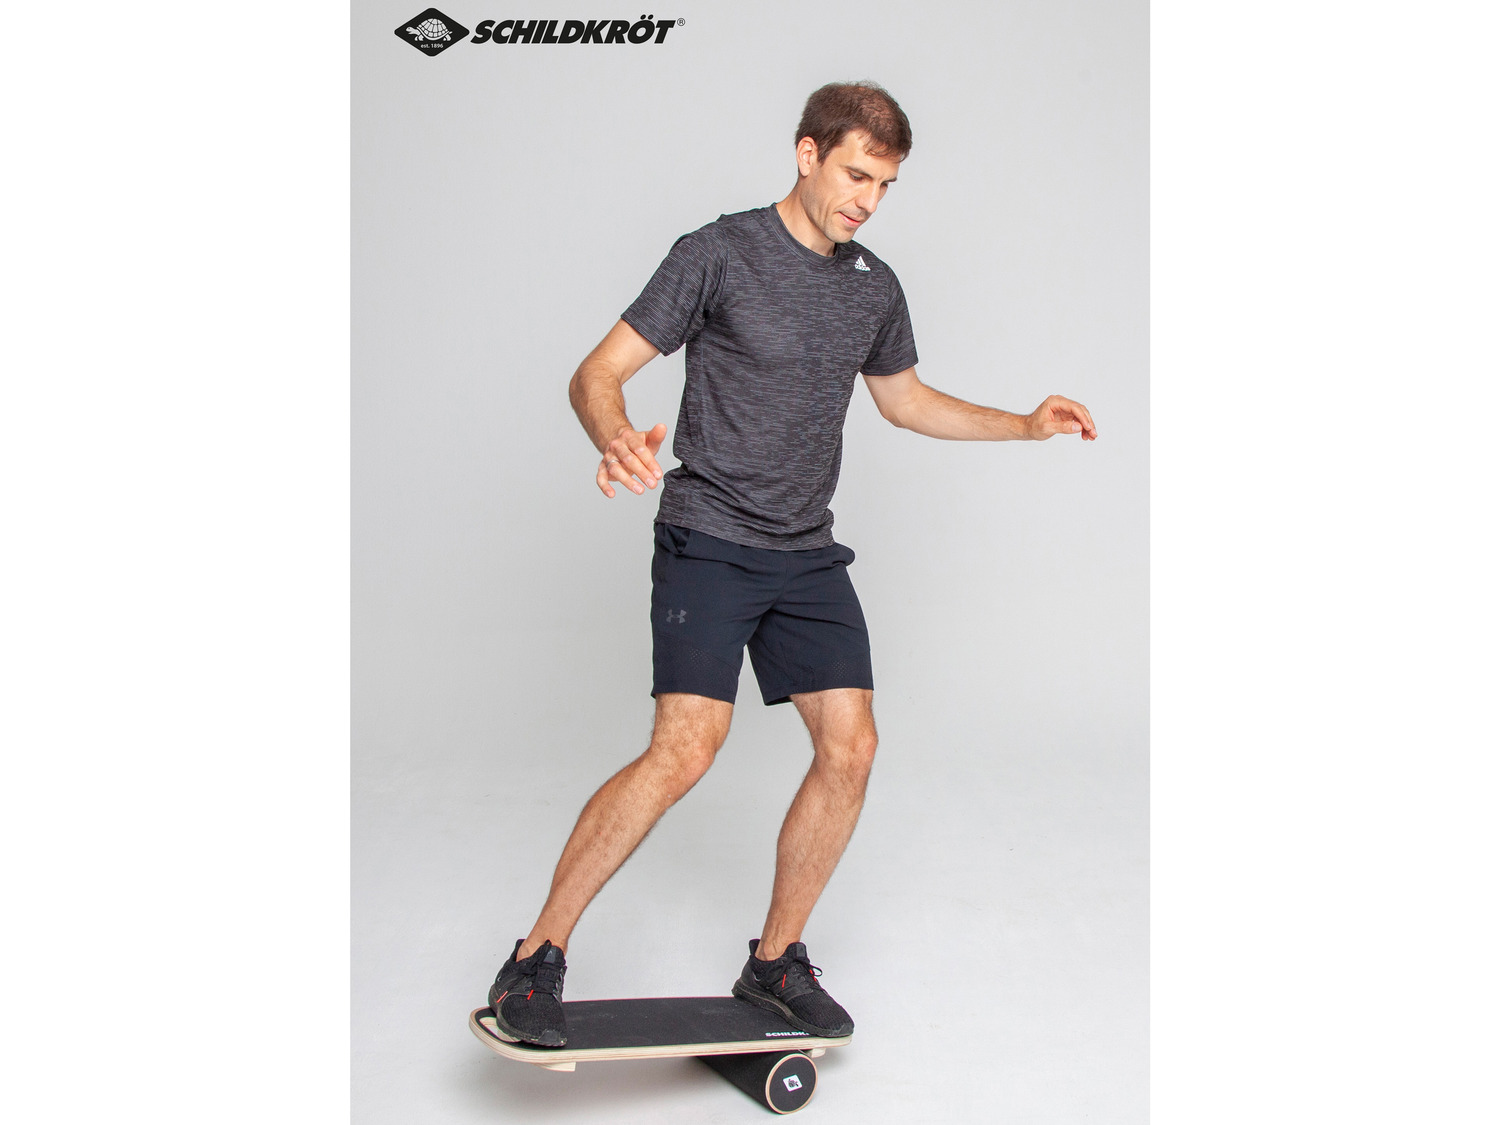 Schildkröt Fitness LIDL | Board Wooden Balance